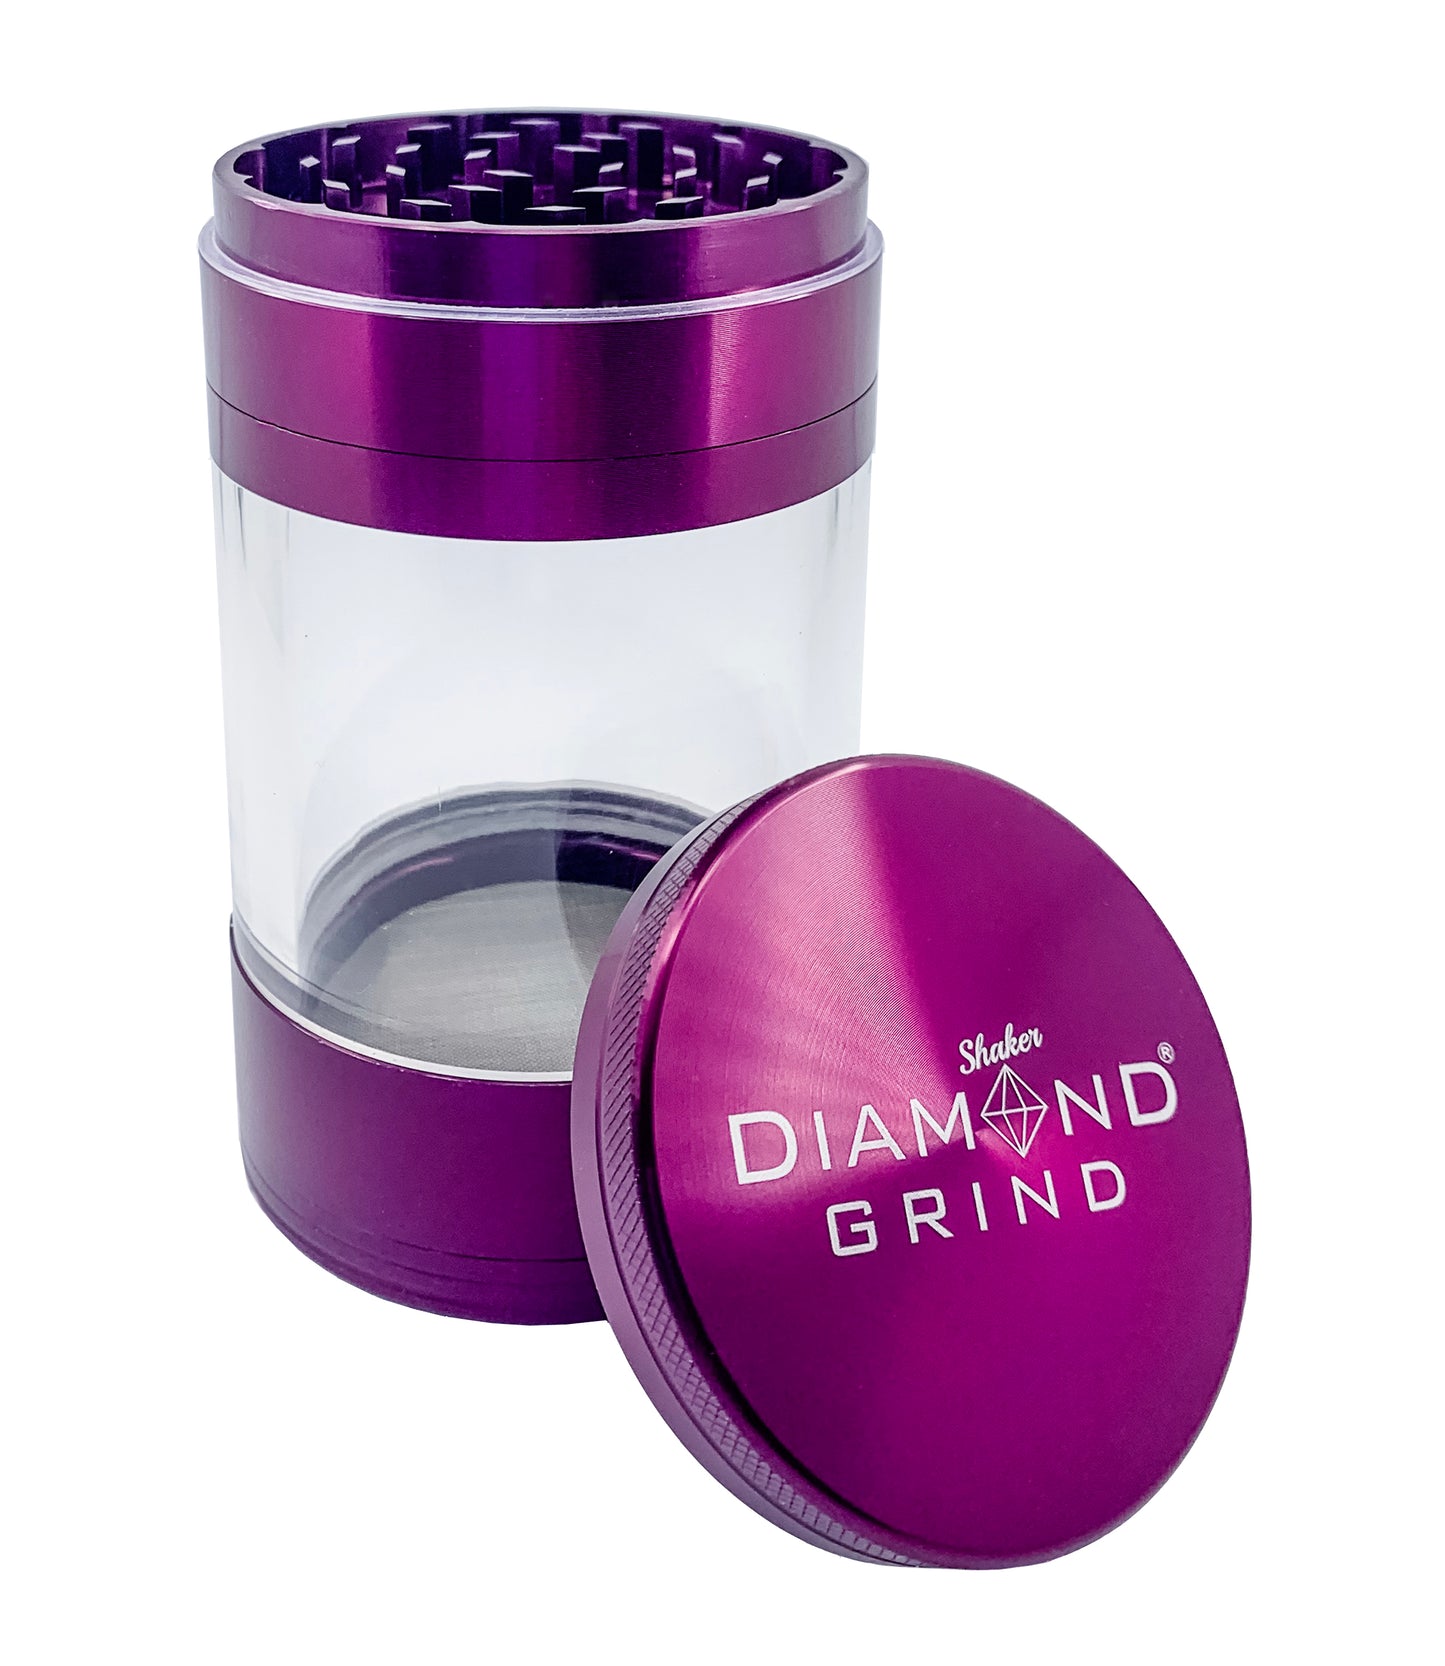 Diamond Grind Shaker